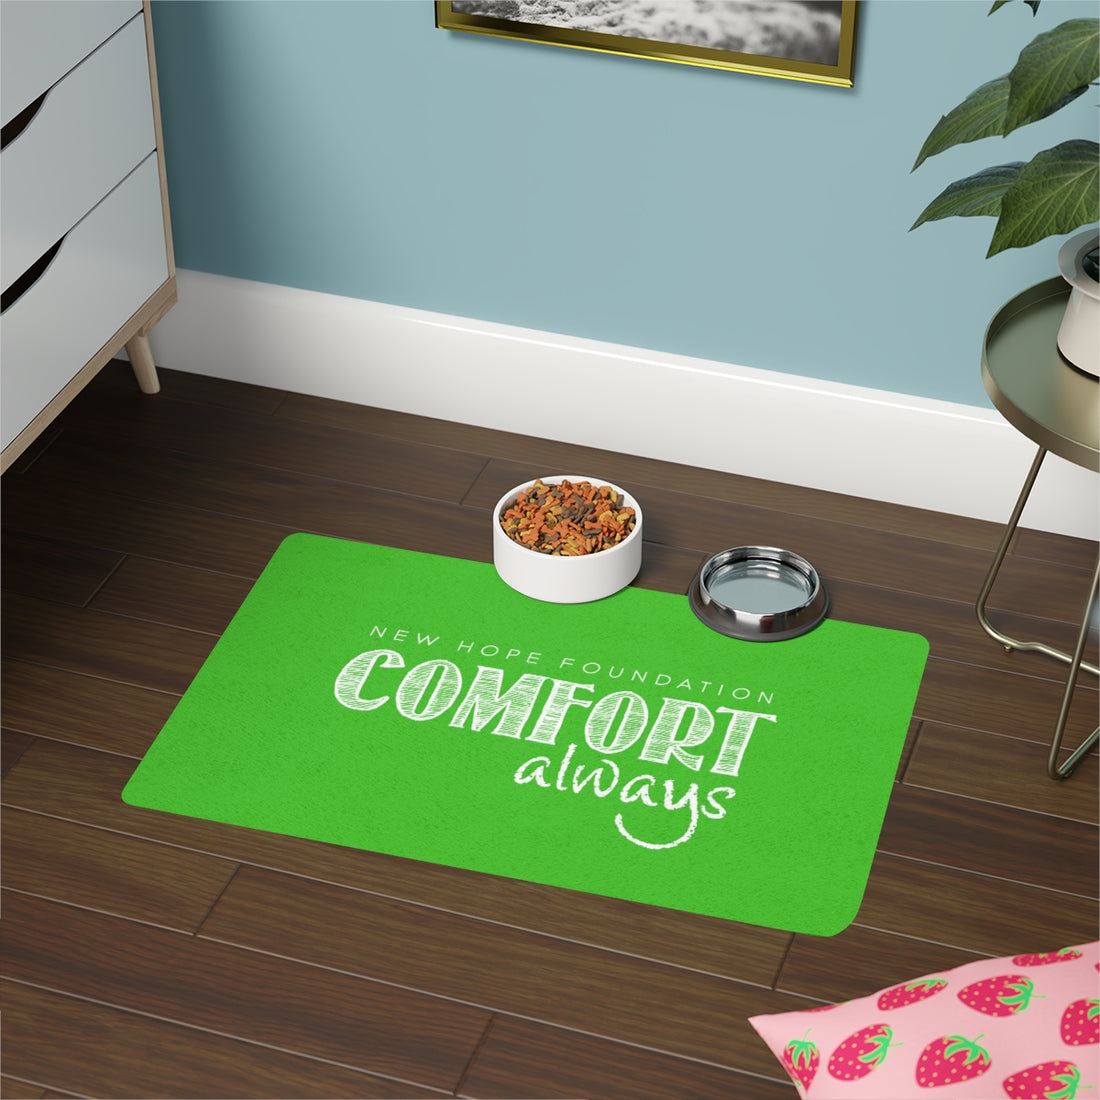 "Comfort Always" NHF Pet Food Mat (Green)